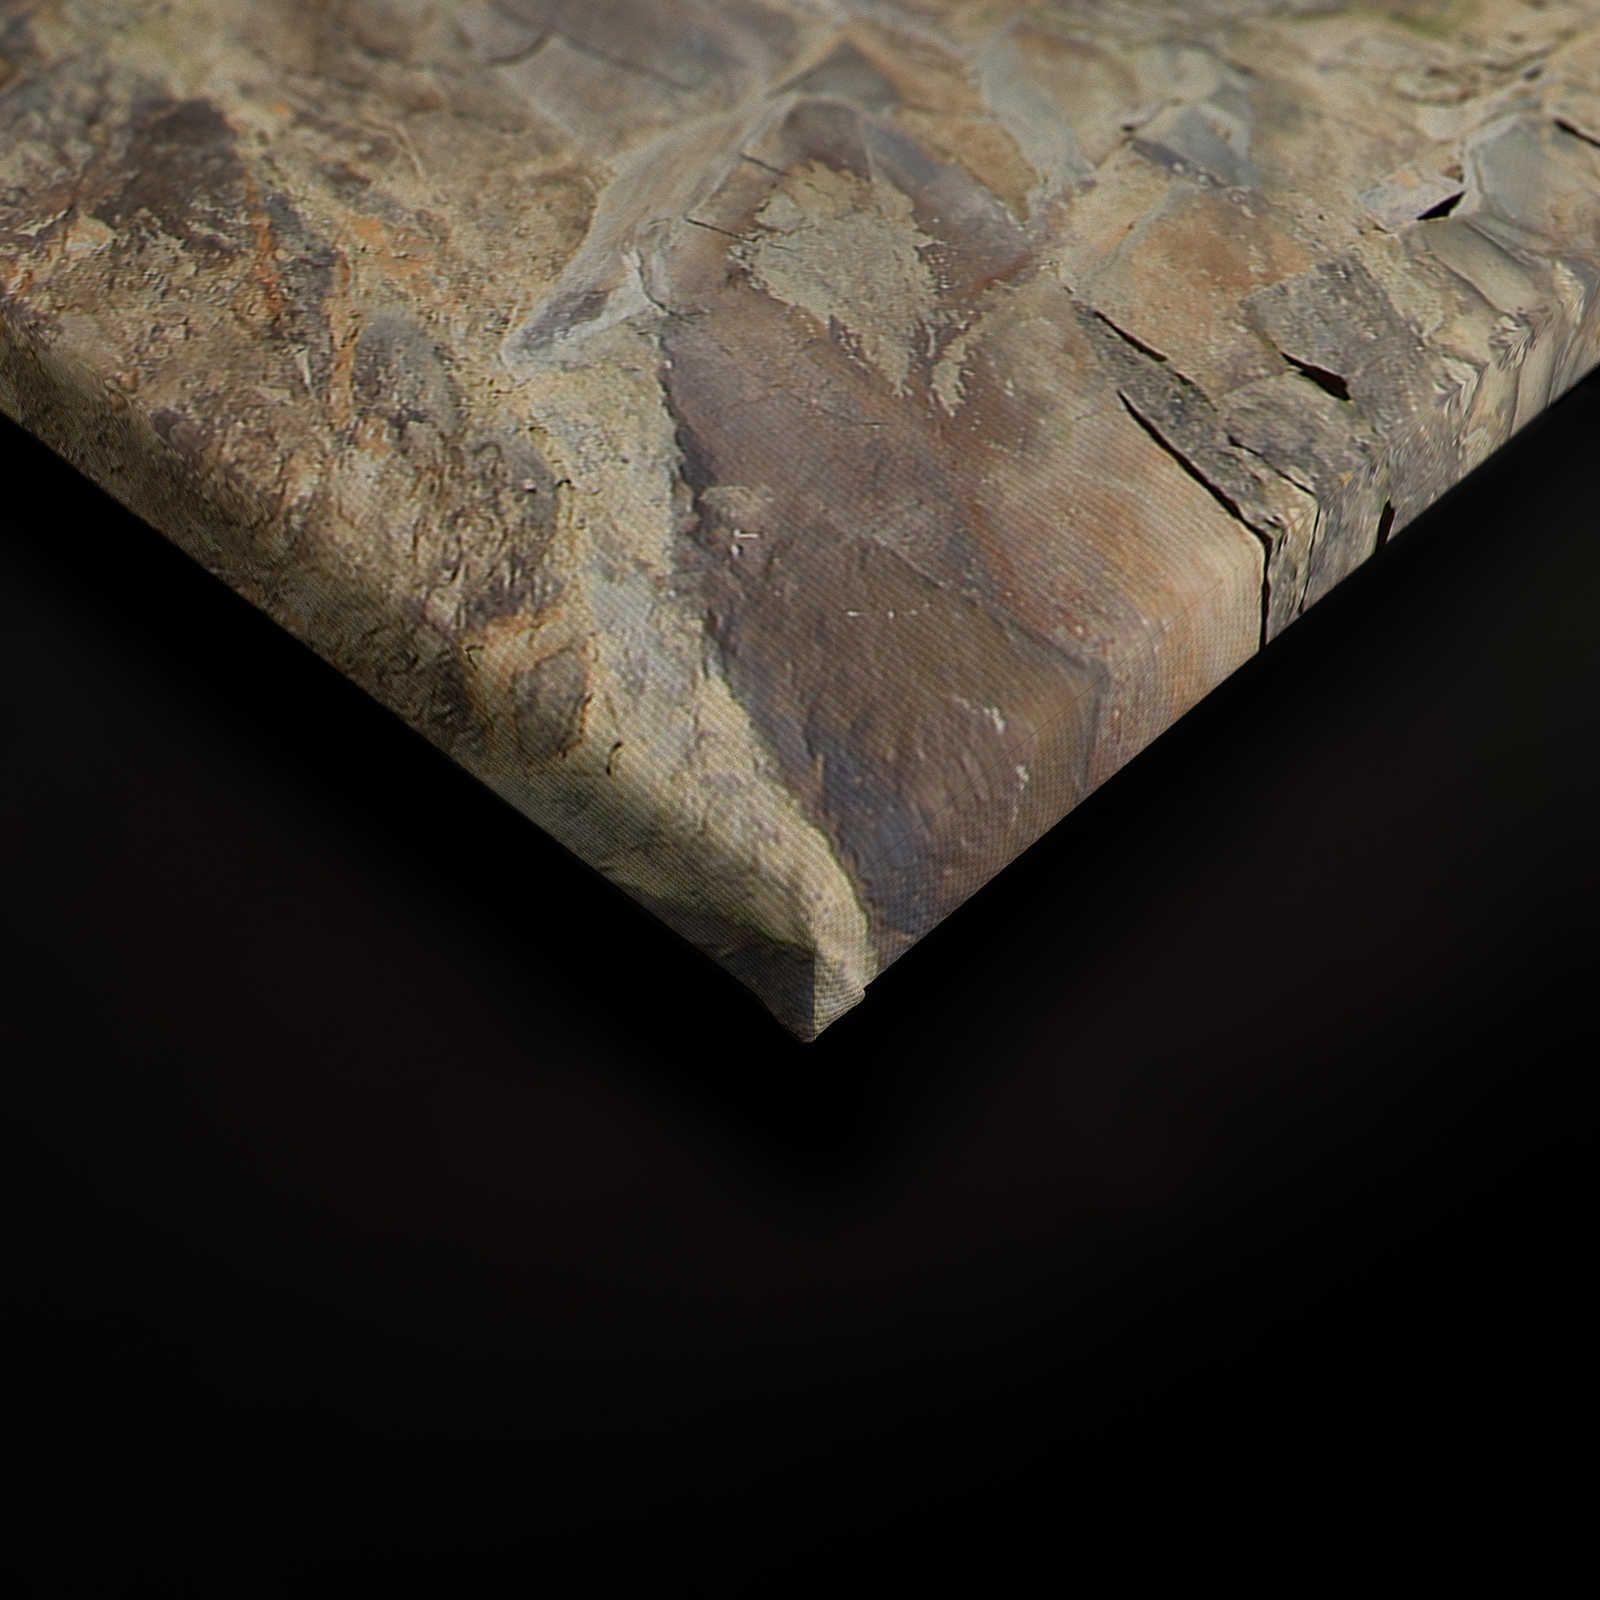             Pintura sobre lienzo efecto piedra 3D, pared de piedra natural - 0,90 m x 0,60 m
        